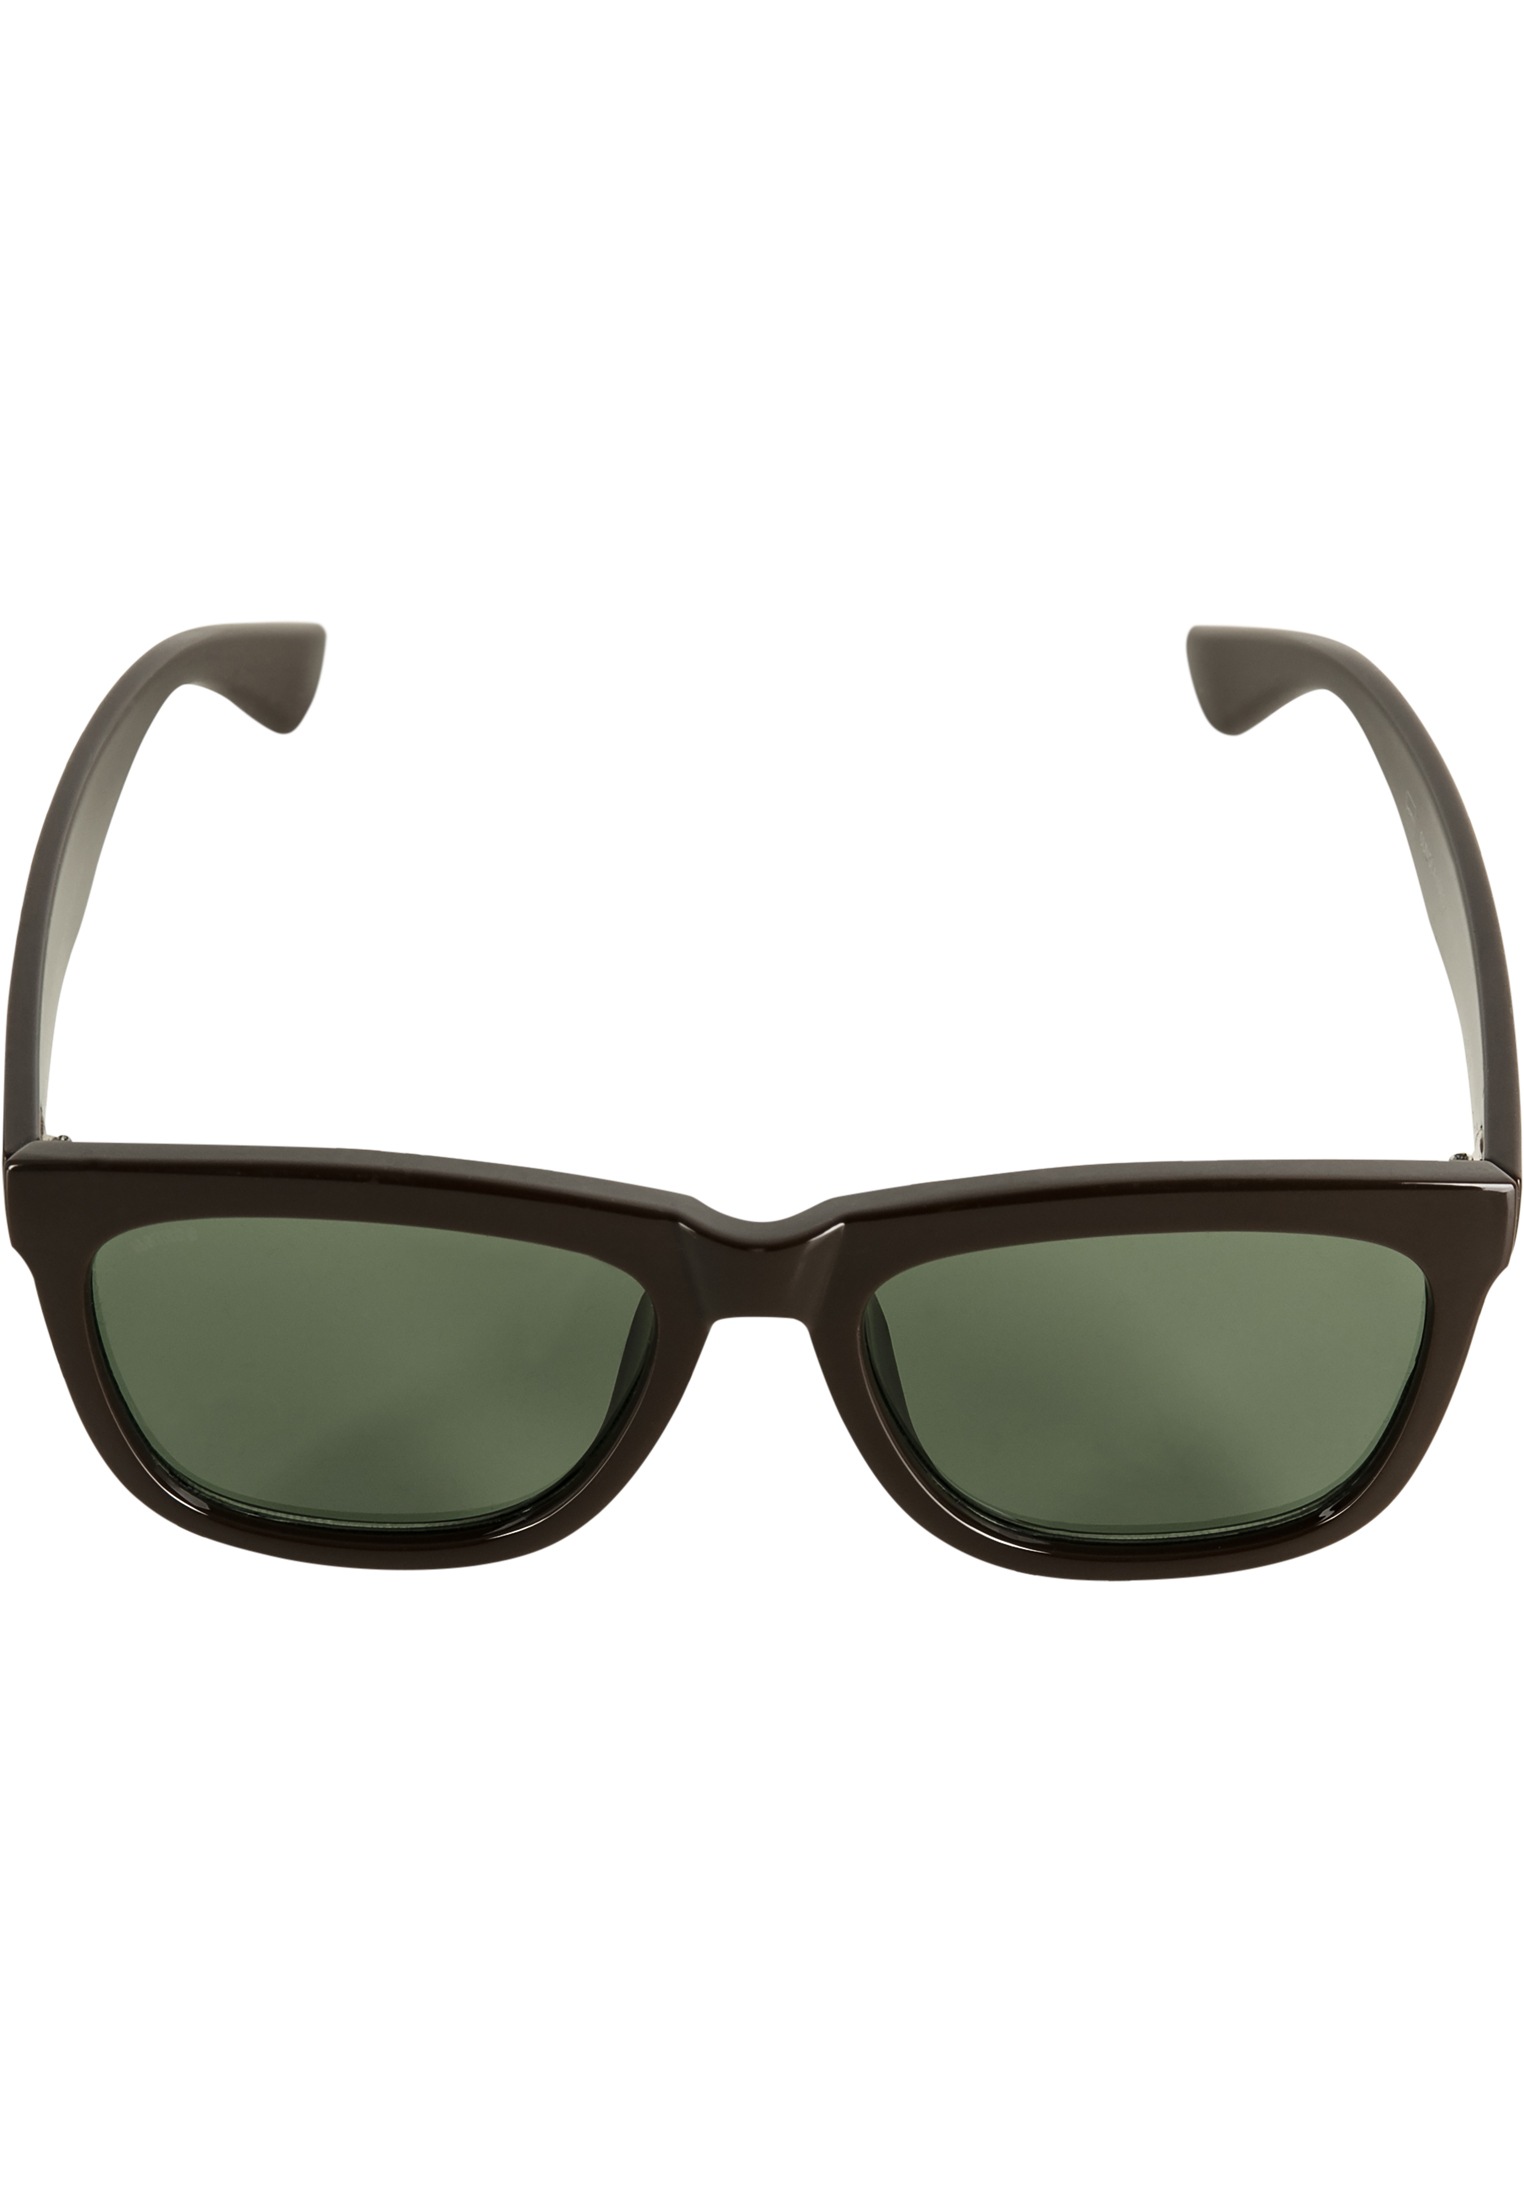 MSTRDS Sonnenbrille »Accessoires Sunglasses September« kaufen | I\'m online walking